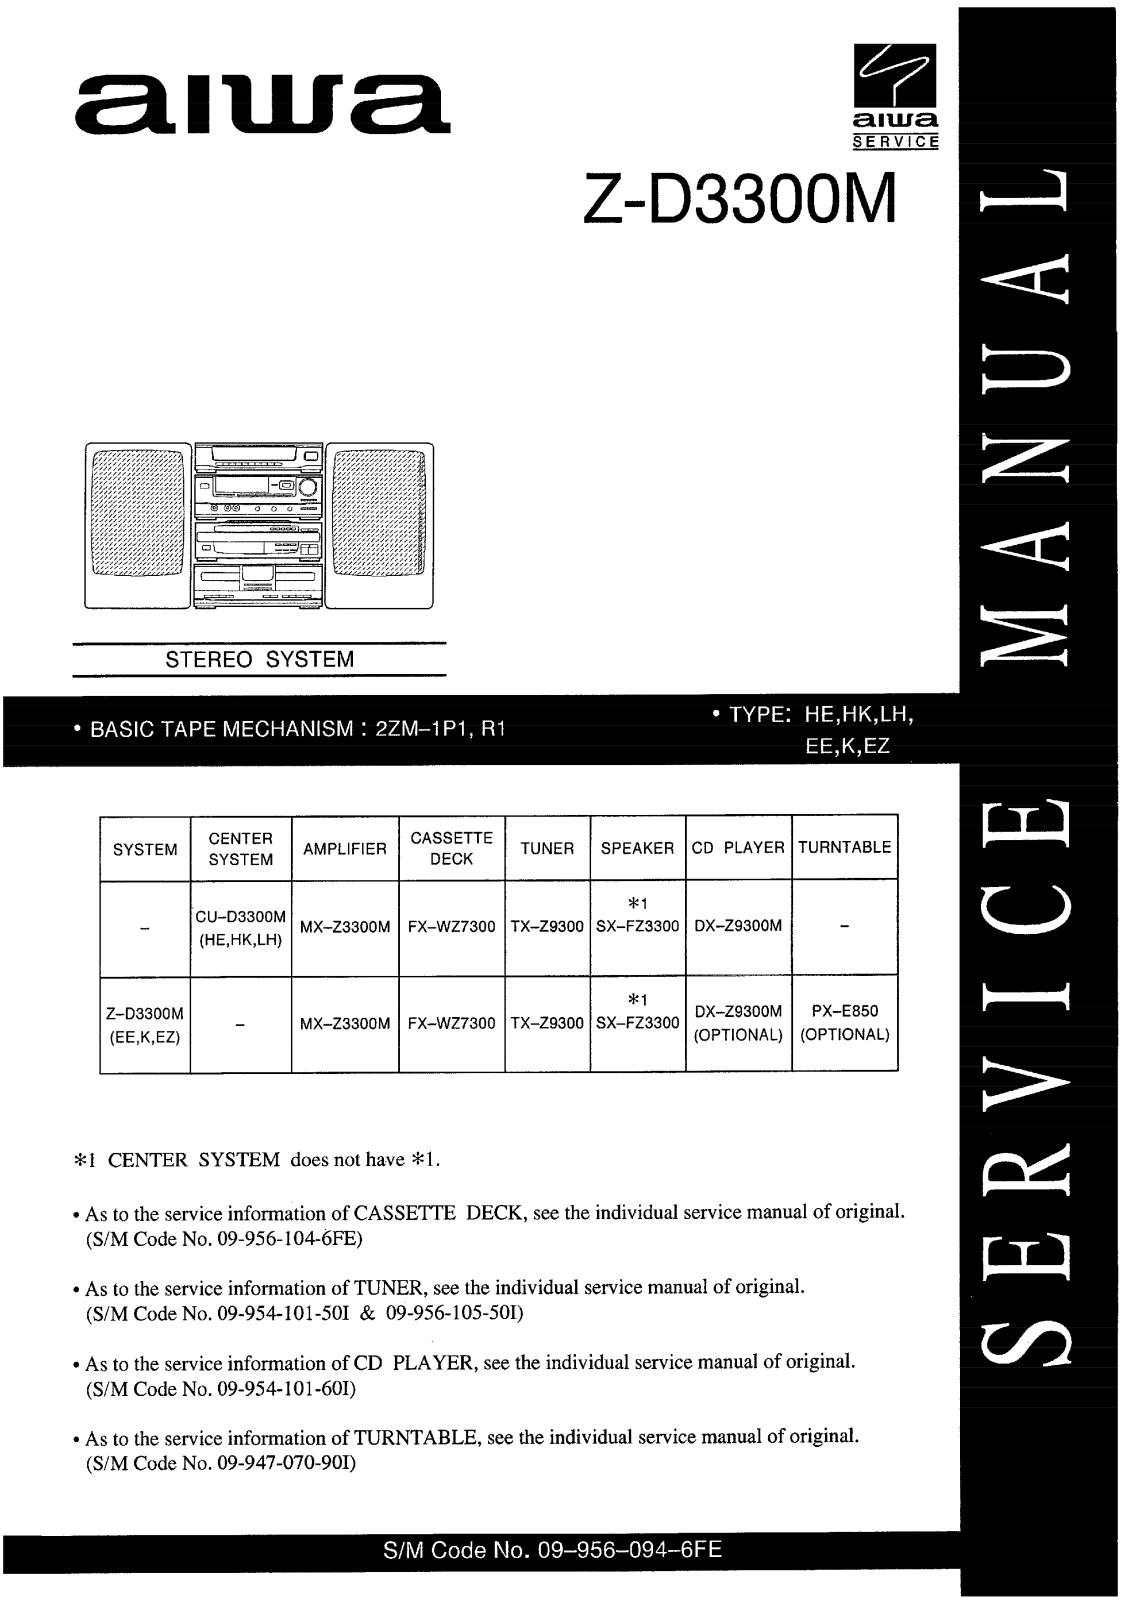 Aiwa Z-D3300M User Manual